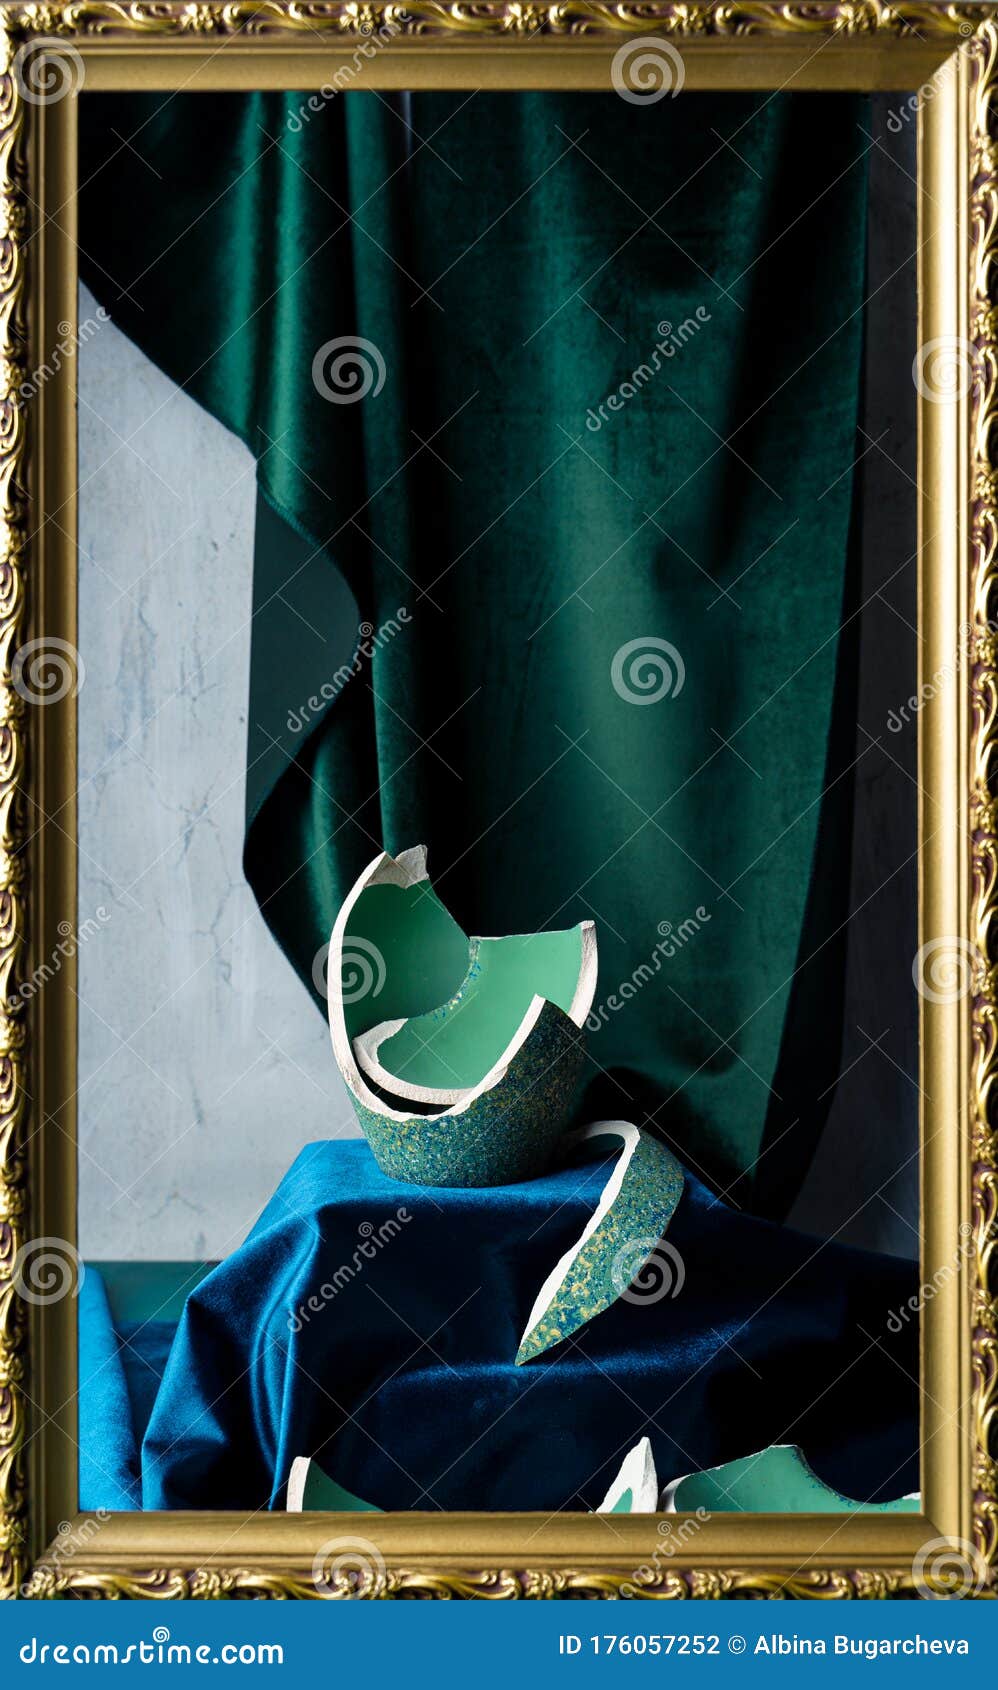 stilllife with remnants of broken teal colored vase, emerald green and dark blue velvet, and picture frame